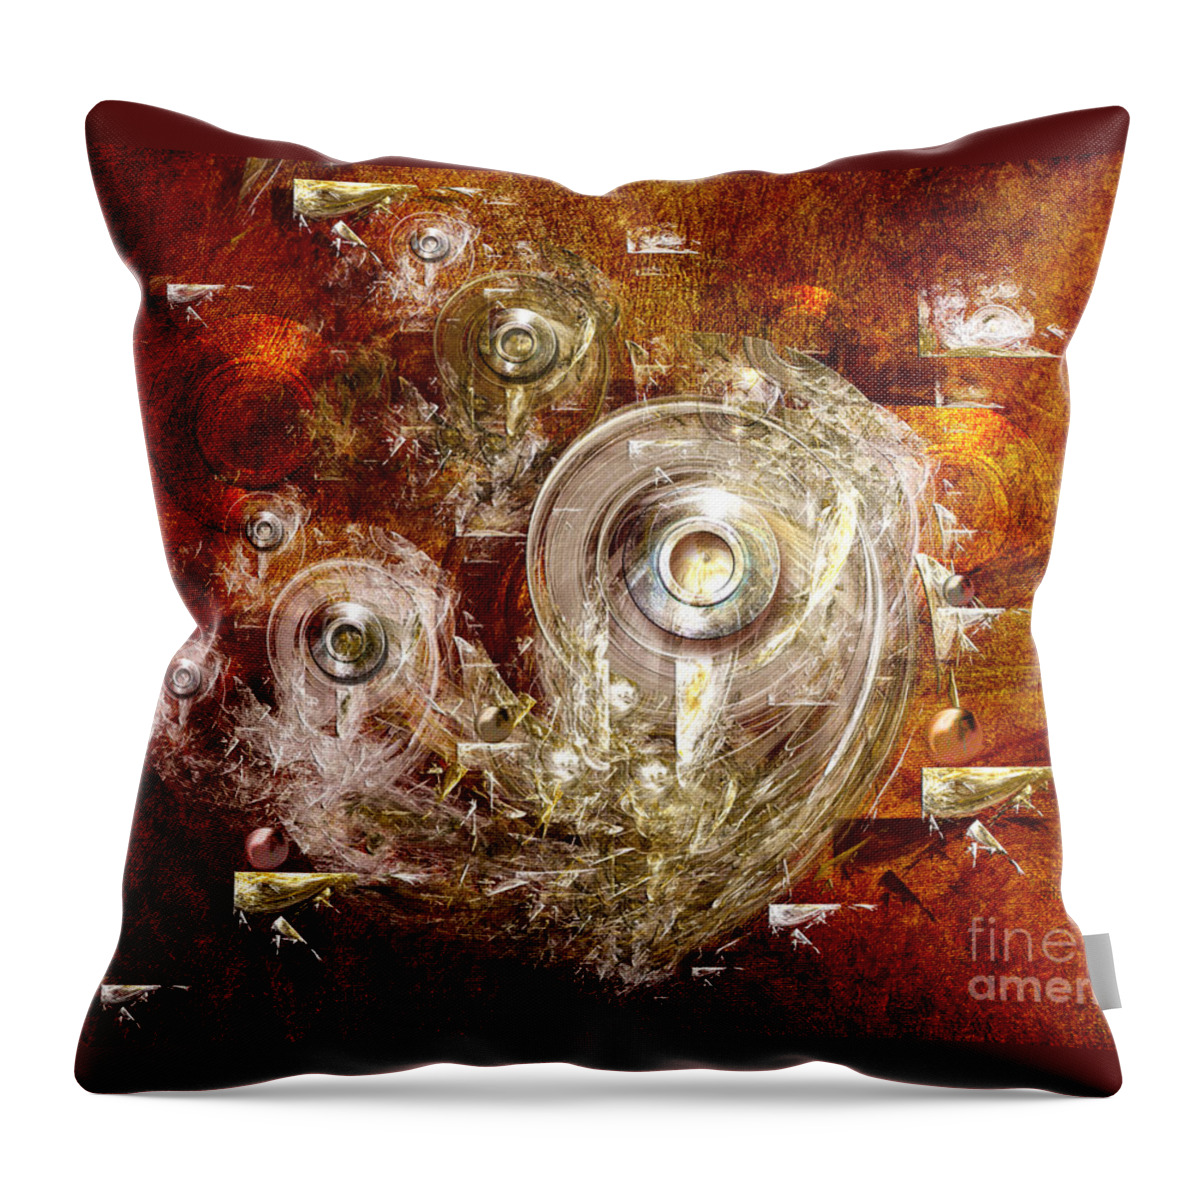 Disc Throw Pillow featuring the digital art Abstract discs by Alexa Szlavics